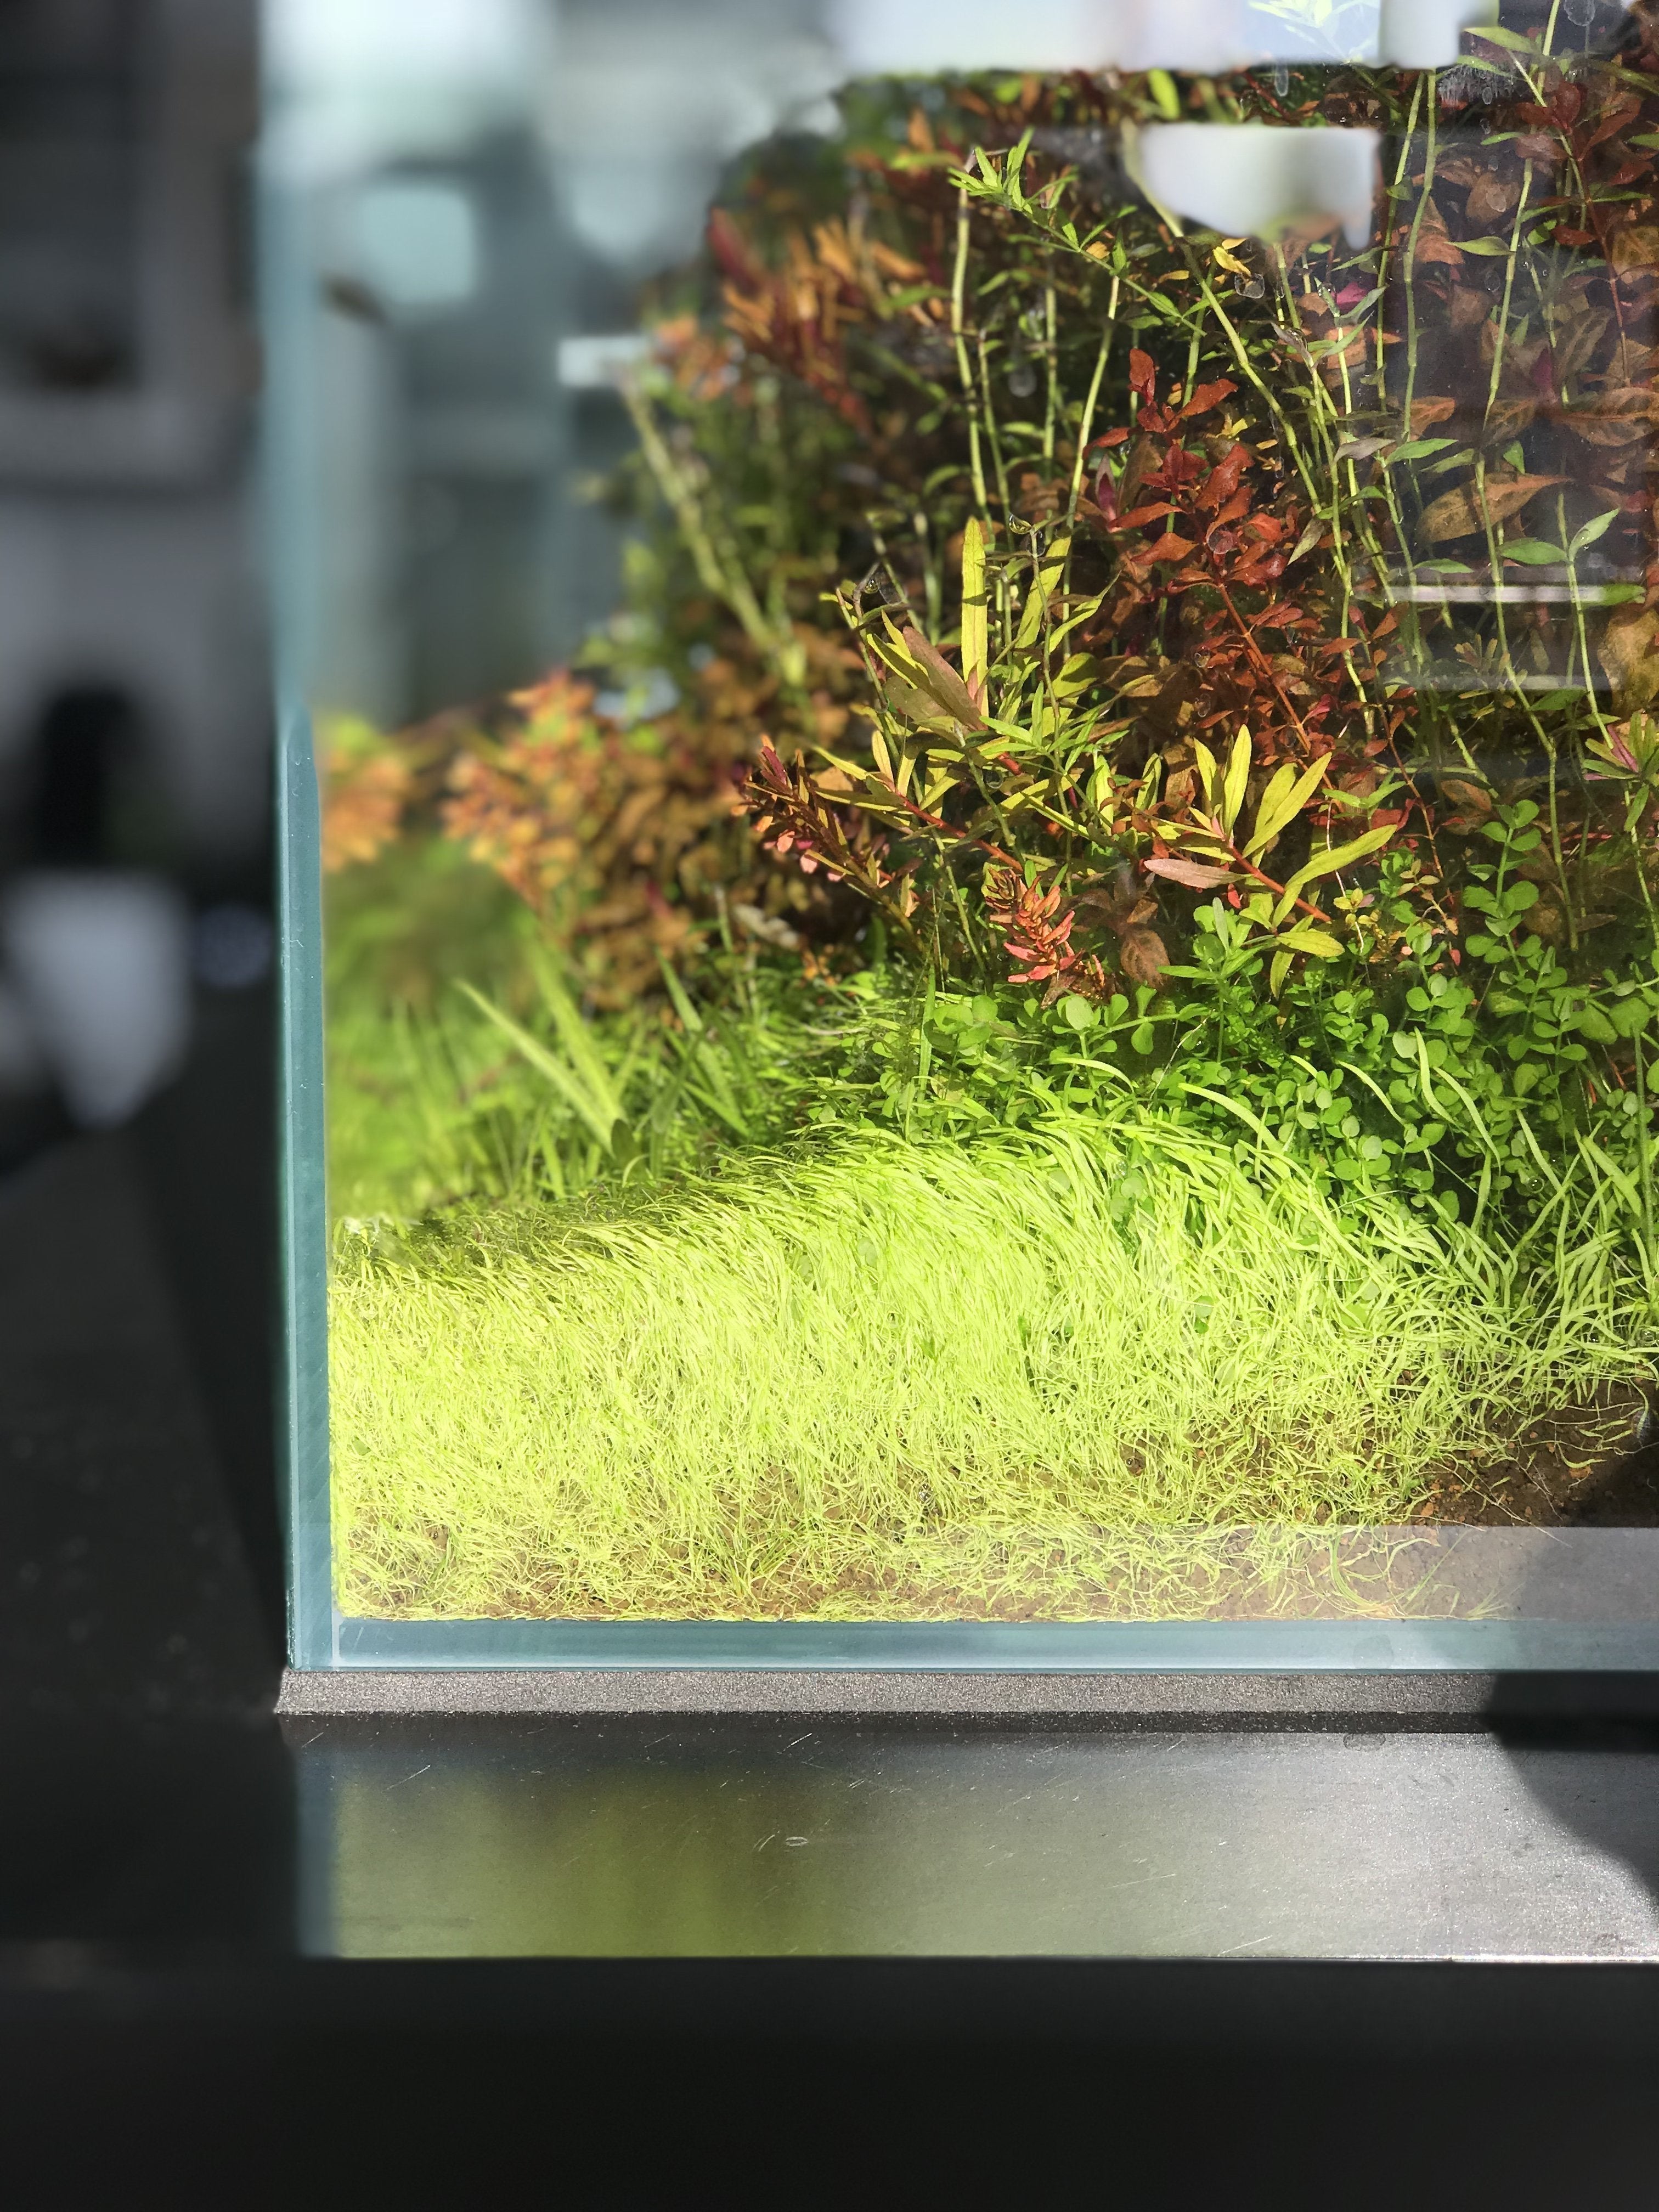 How to make a grass carpet in your aquarium?